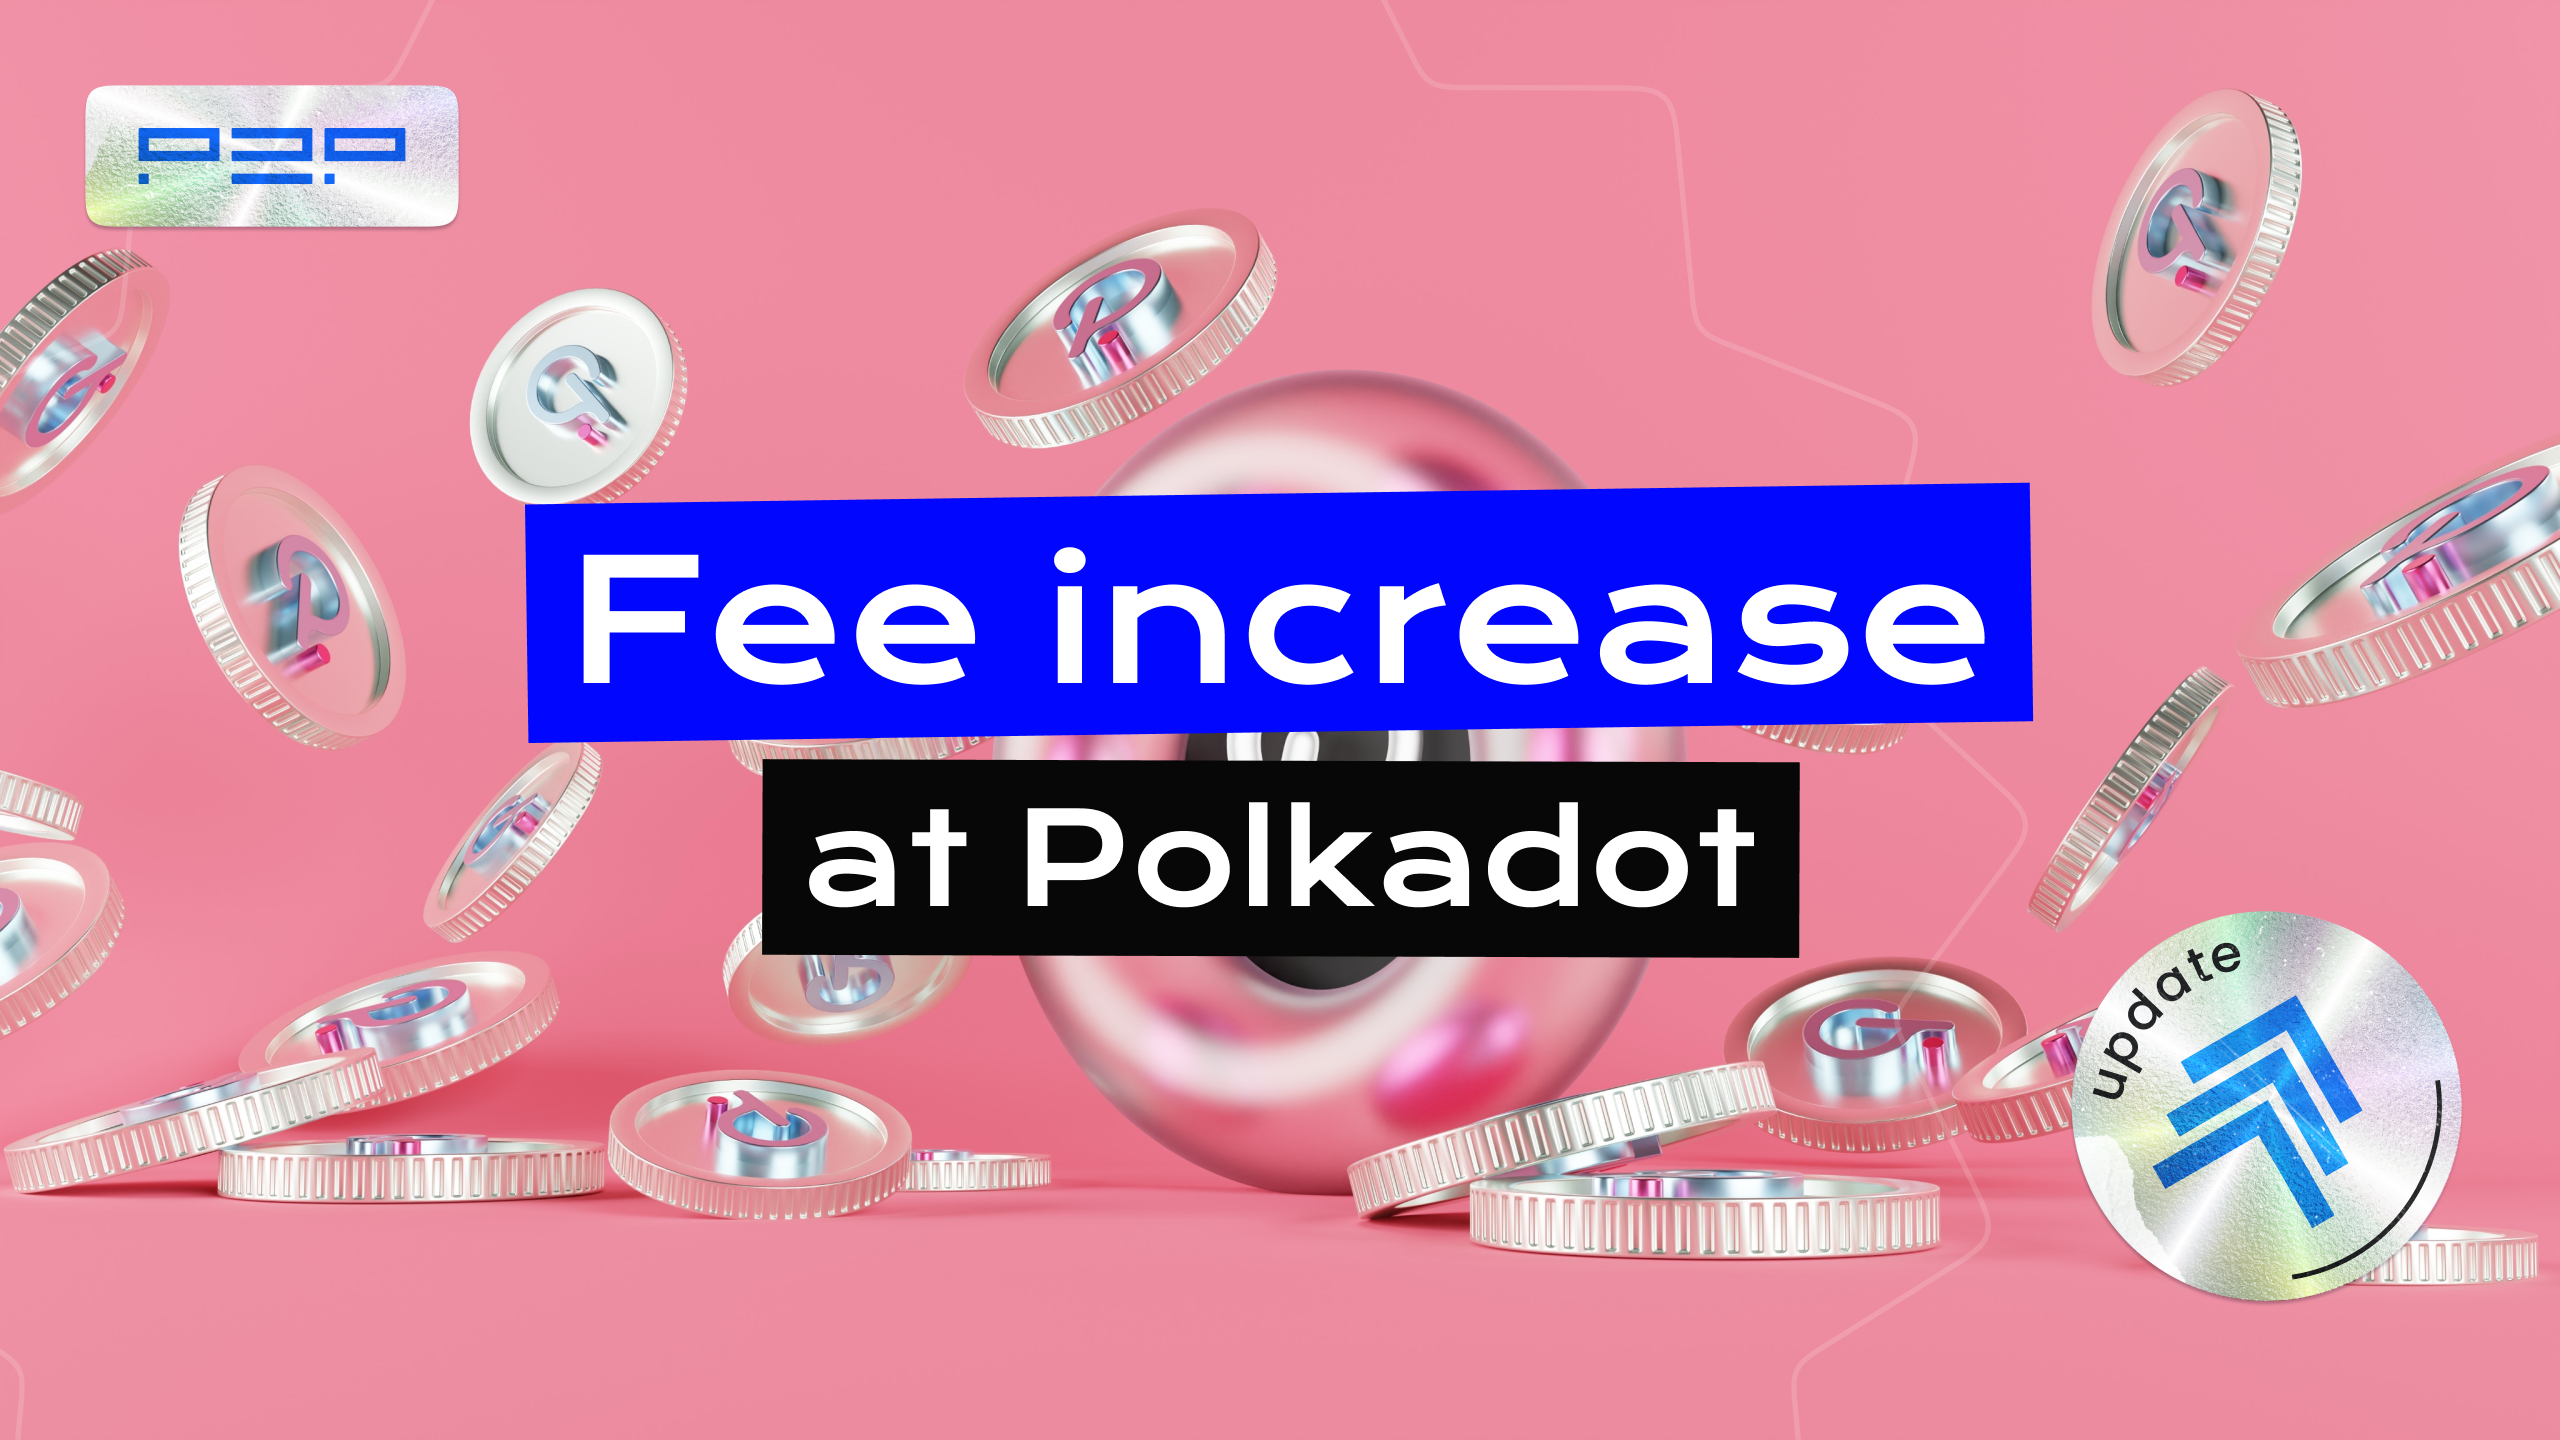 P2P Raises Fee at Polkadot while Continuing to increase sustainability